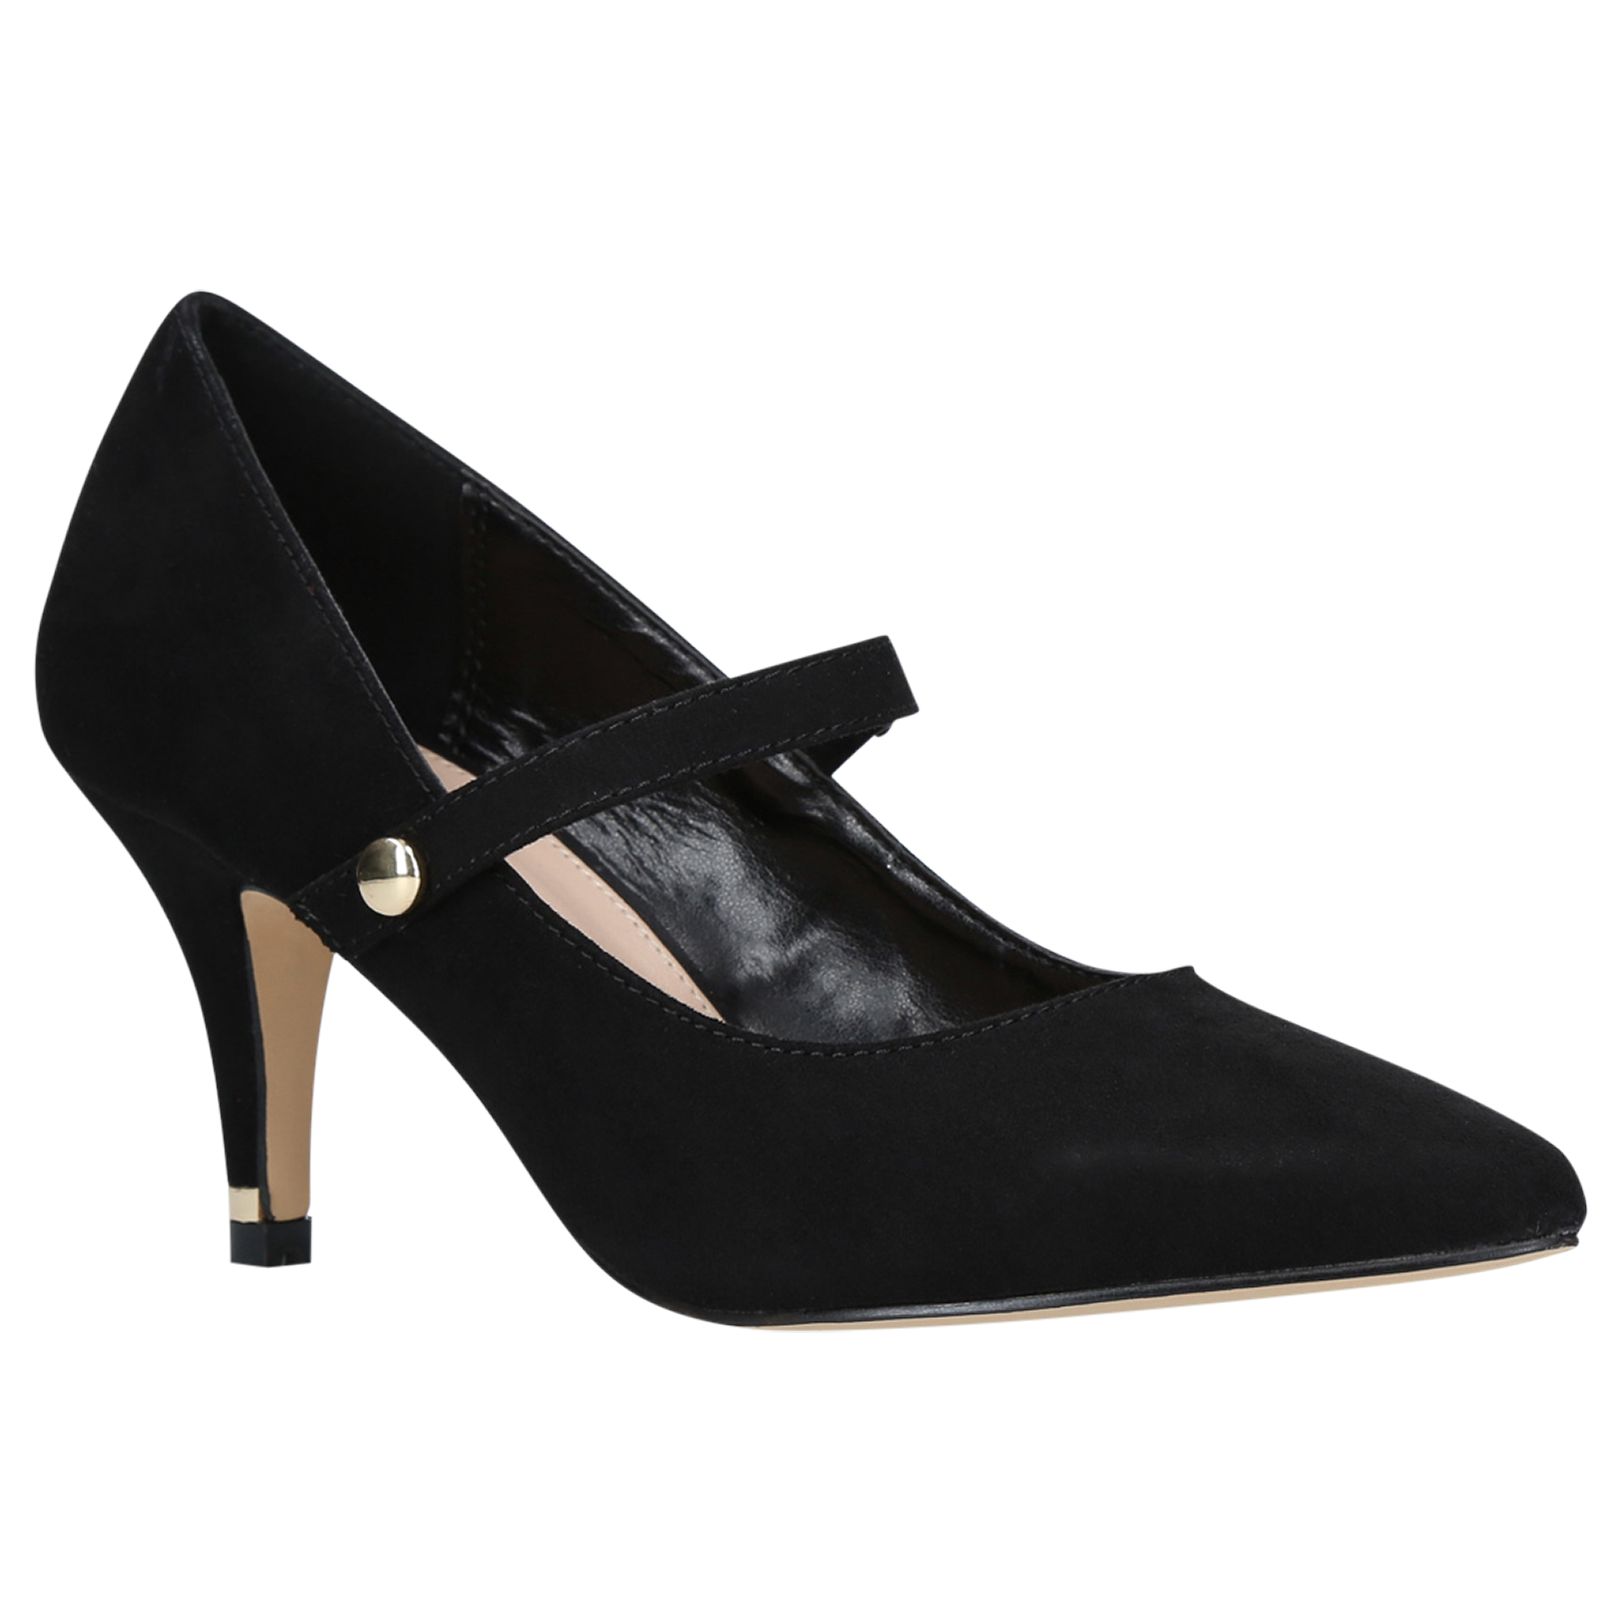 Carvela Kream Court Shoes, Black, 8